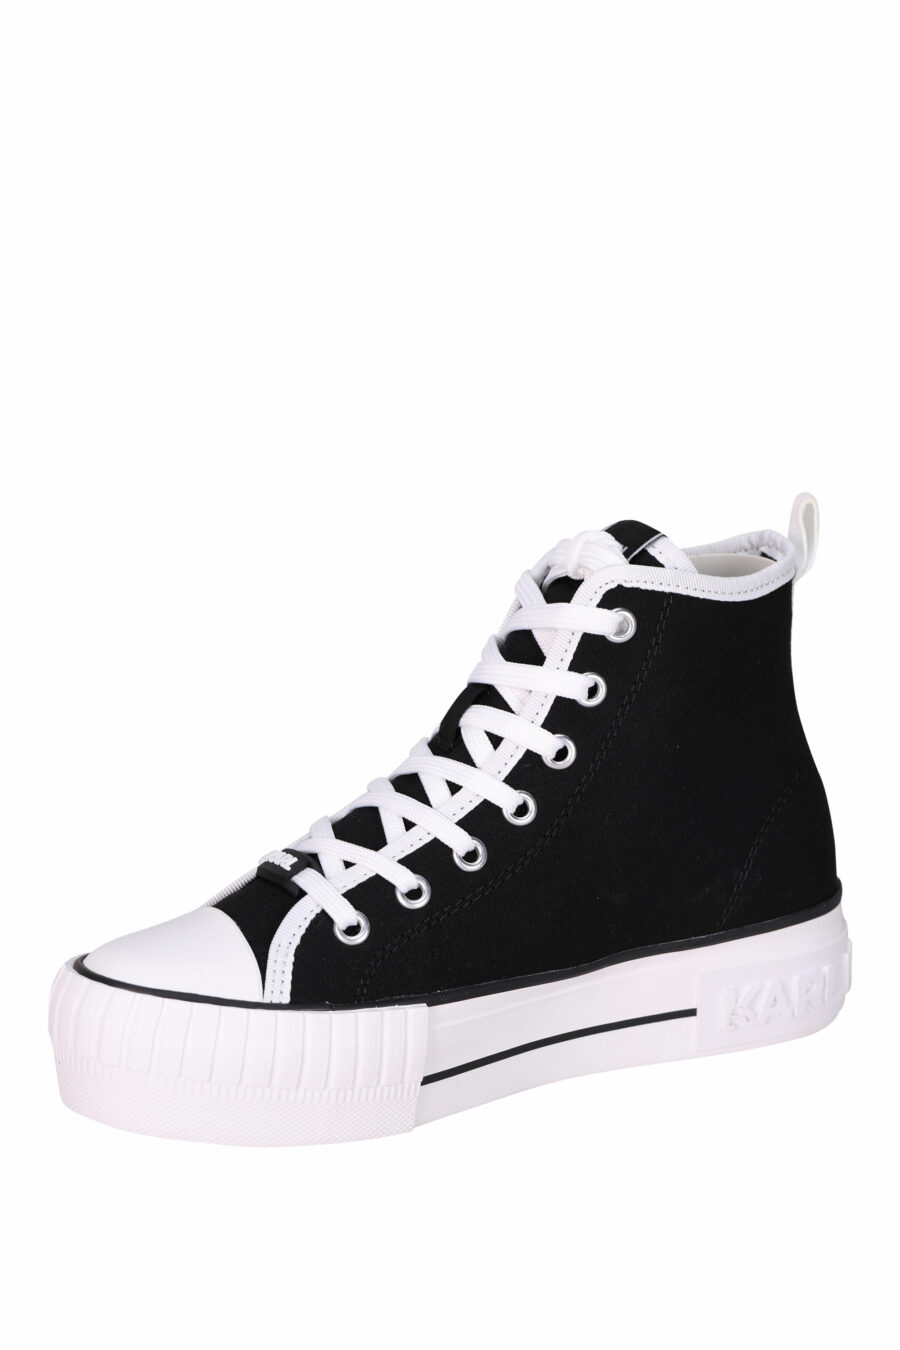 Zapatillas negras altas estilo "converse" con minilogo de goma "karl" - 5059529384769 3